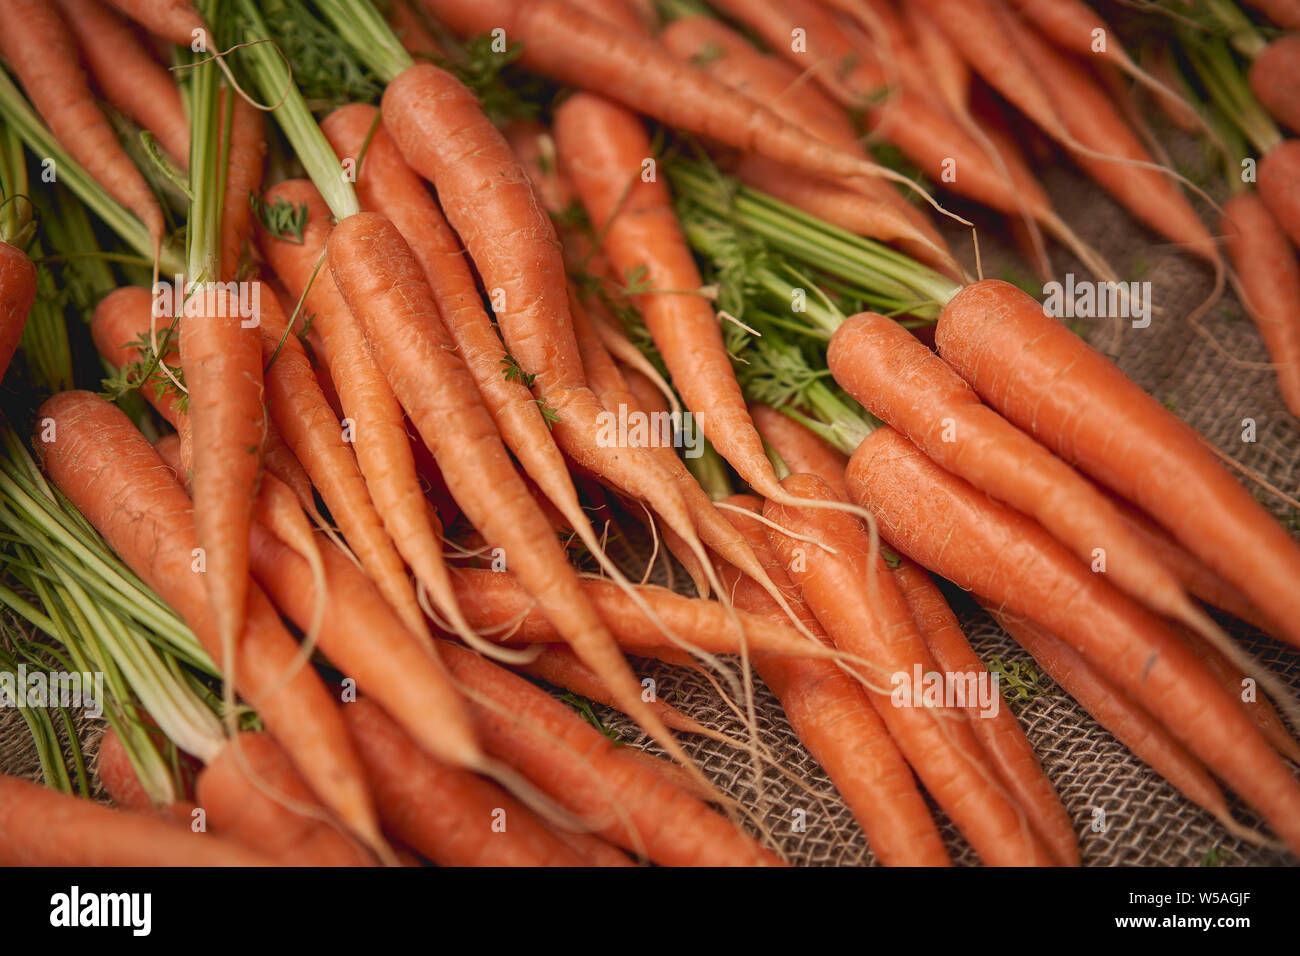 Organic carrots on sale in a local farmer's market. Landscape format. Stock Photo